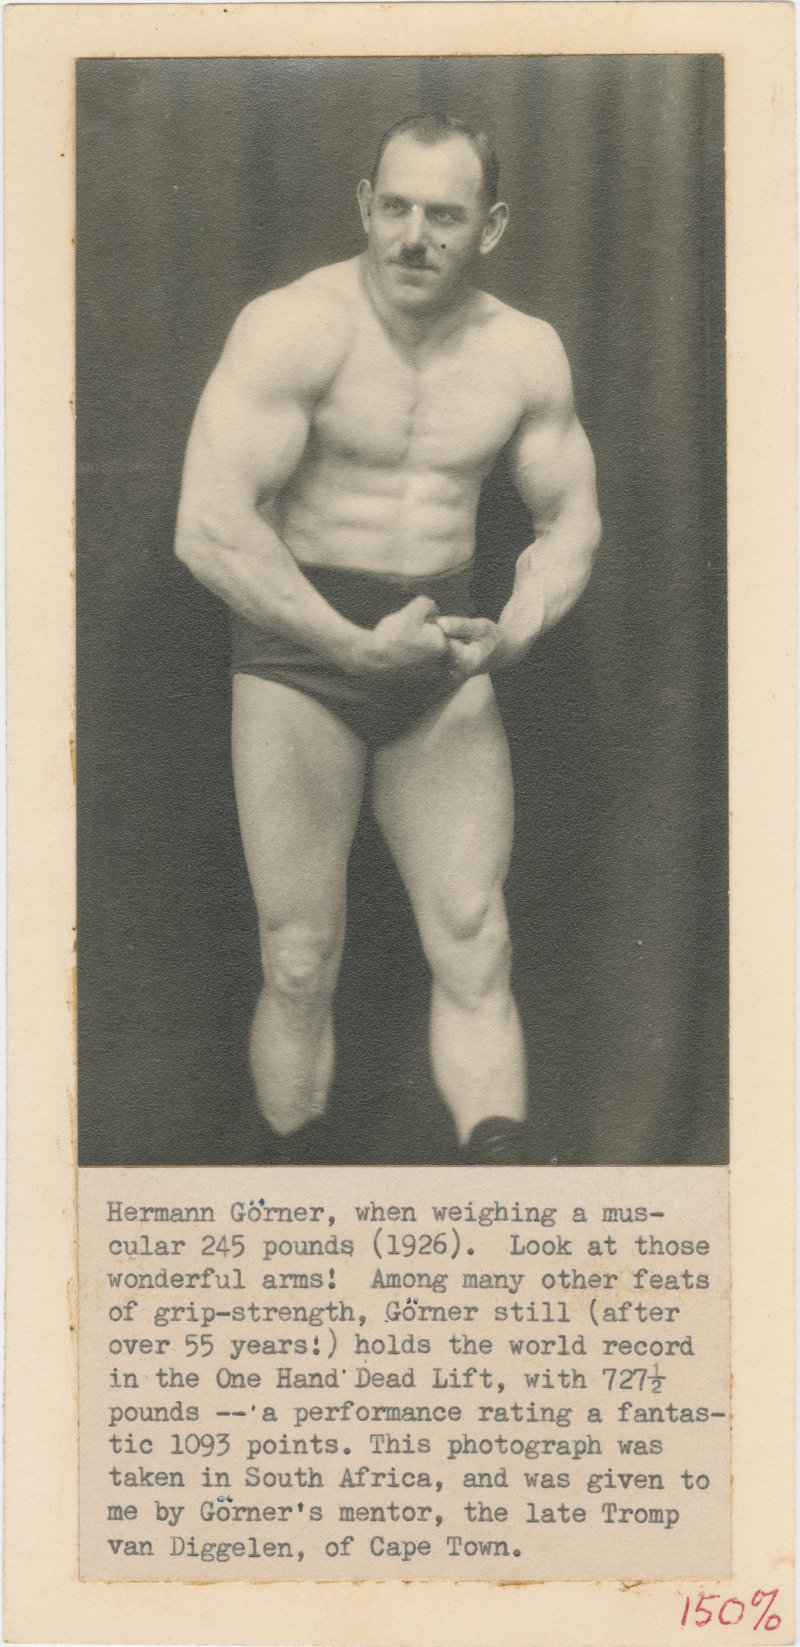 Hermann Gorner, when weighing a muscular 245 pounds